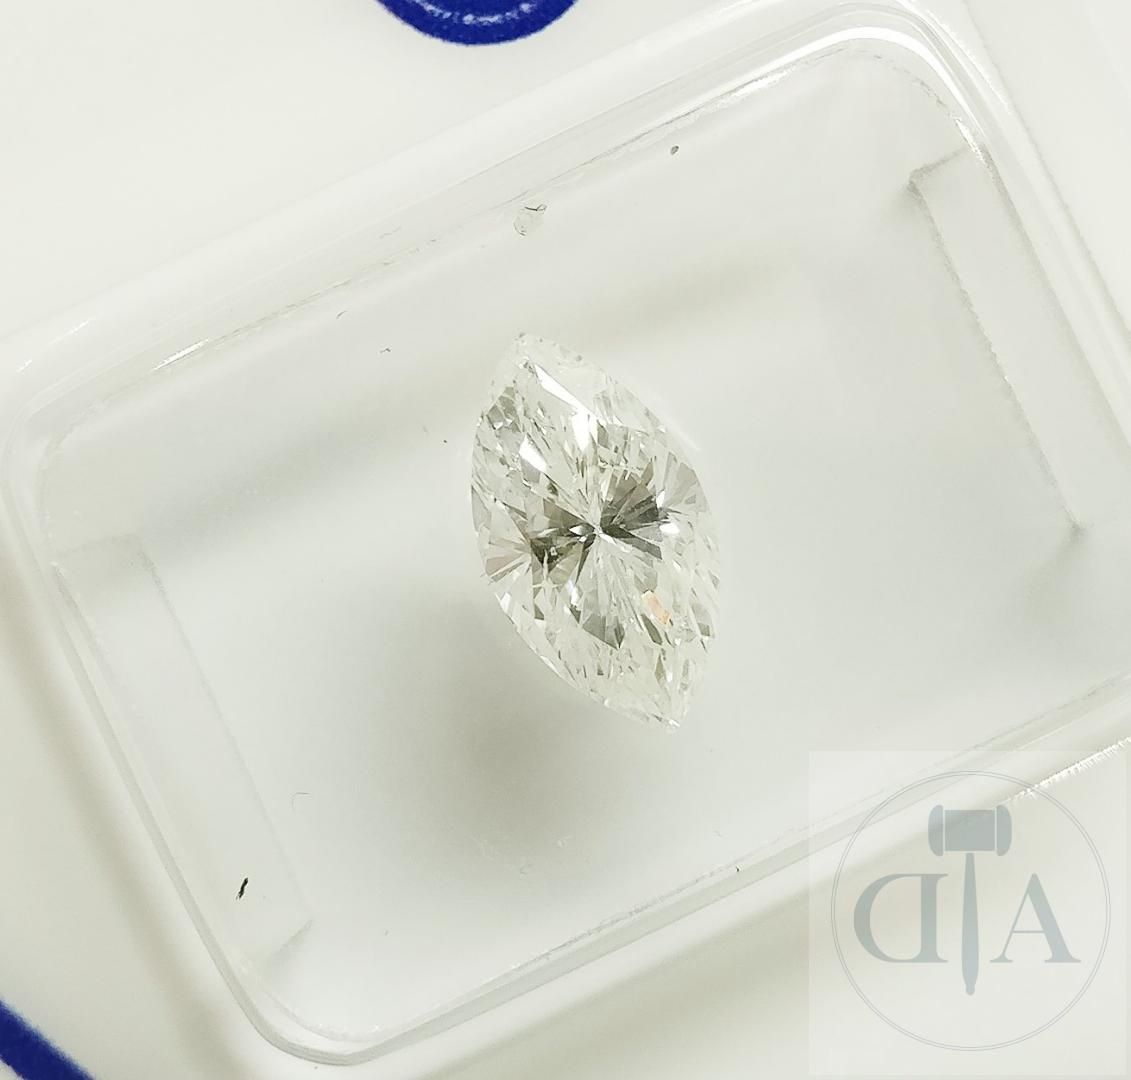 Null "1.03 克拉 ALGT 认证钻石- ALGT 证书编号：11909843 
- 形状：榄尖形榄尖形
- 克拉重量： 1.03 克拉 
- 颜色： &hellip;